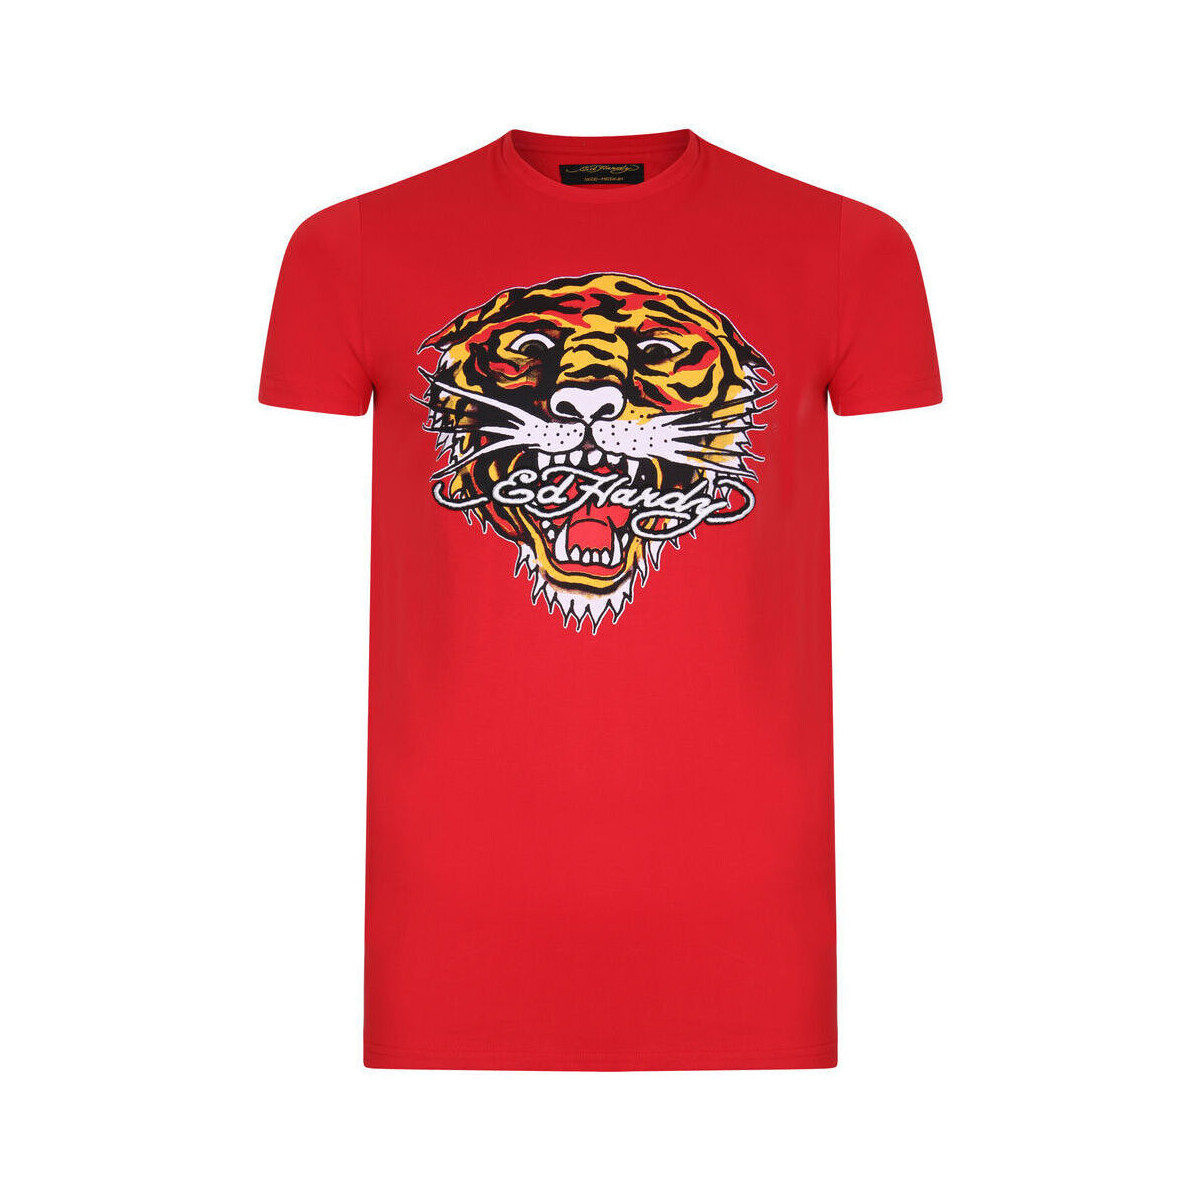 textil Hombre Camisetas manga corta Ed Hardy Tiger mouth graphic t-shirt red Rojo